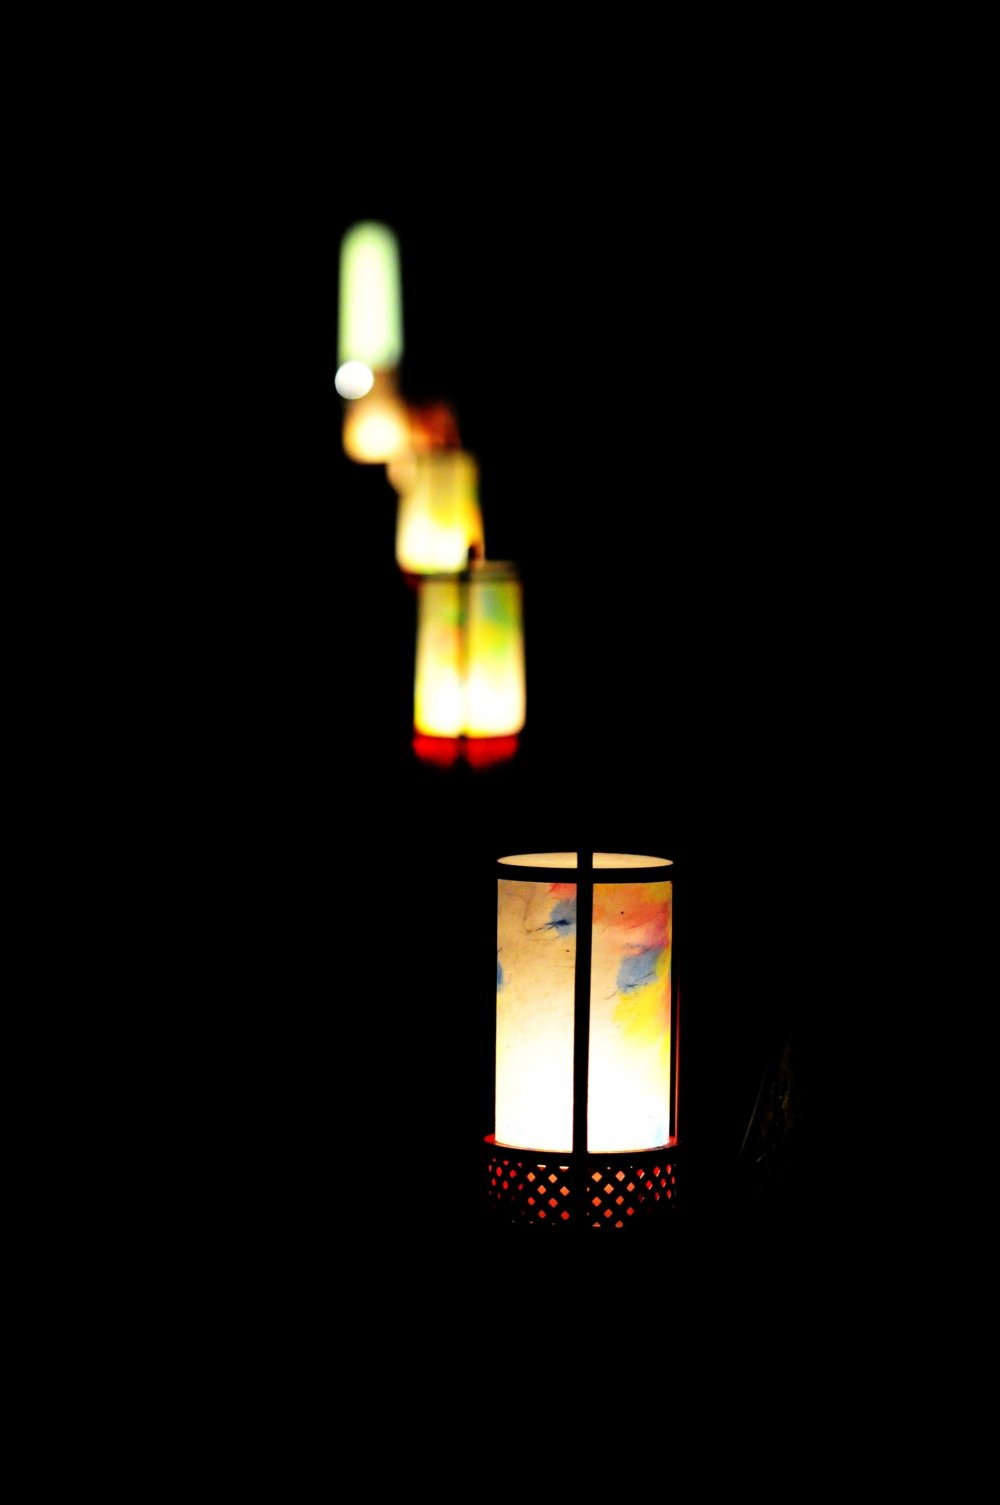 Lit-up lanterns placed regularly alongside the pathway